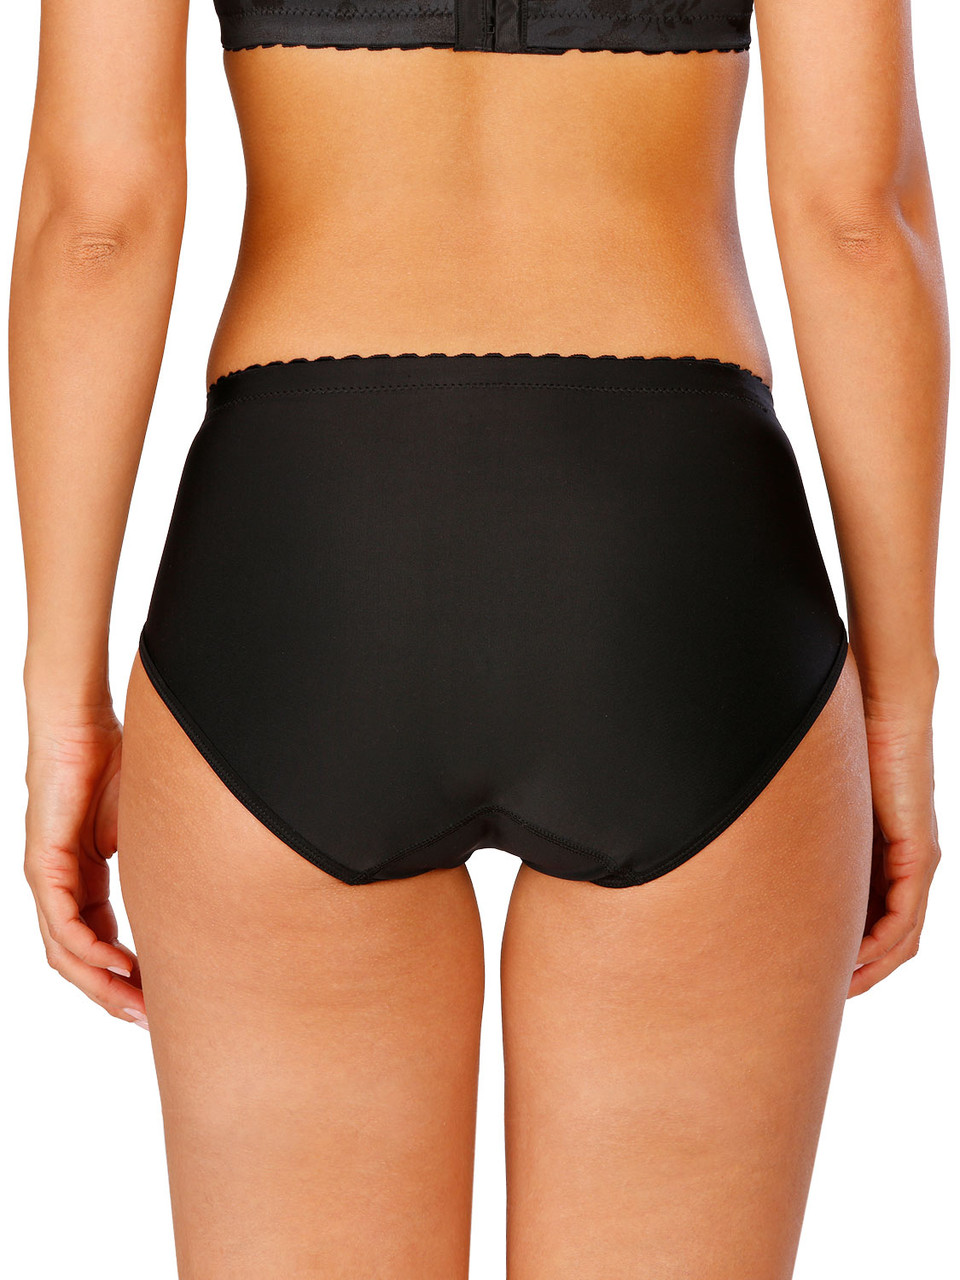 RelaxMaternity 5200 (Black, S) Cotton high-waist postpartum control knickers  : : Fashion